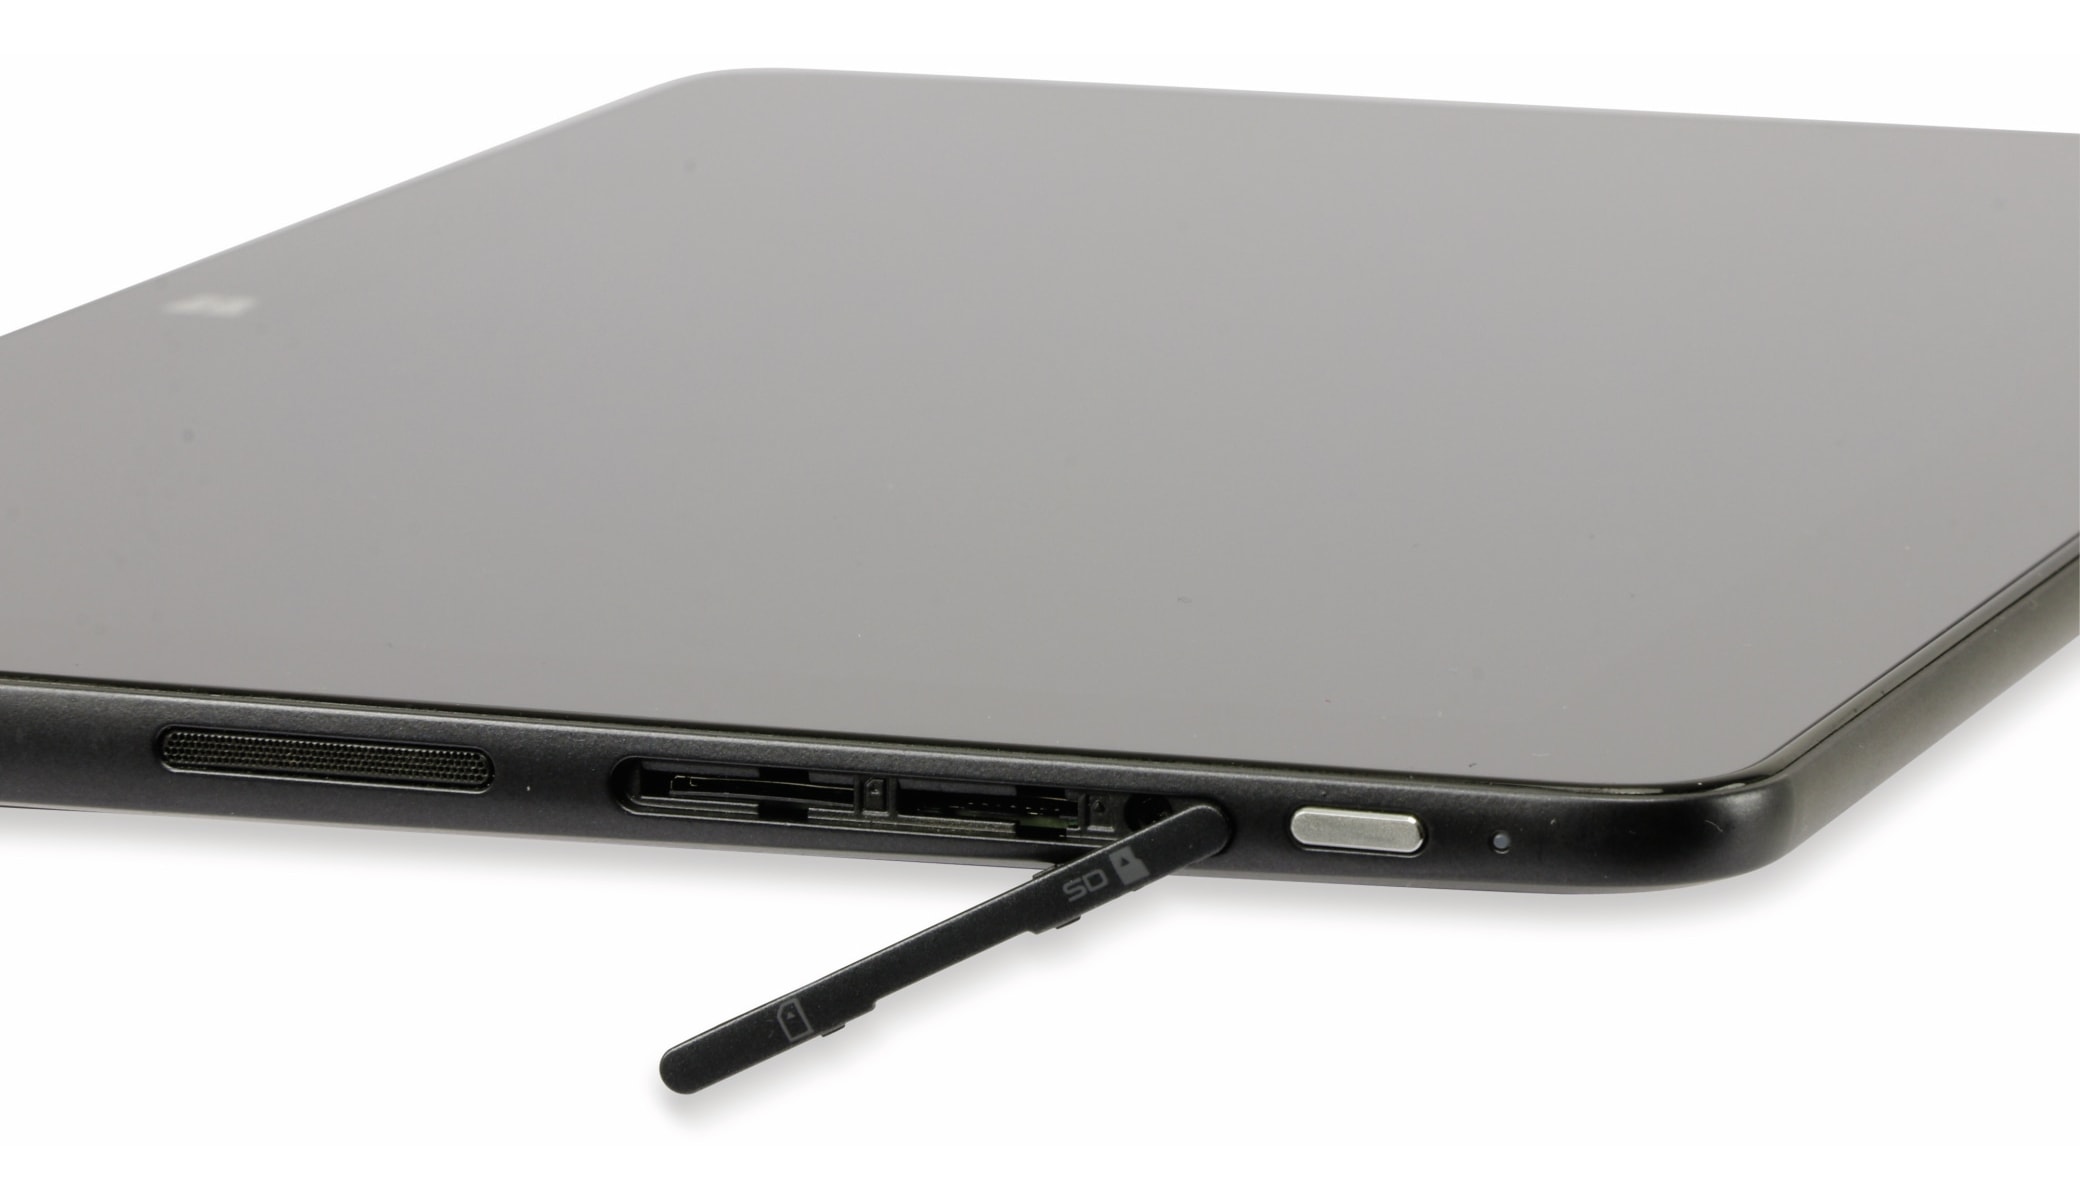 Dell Tablet 7140 M-5Y71, 4G LTE, 128 GB SSD, Win10P, gebraucht